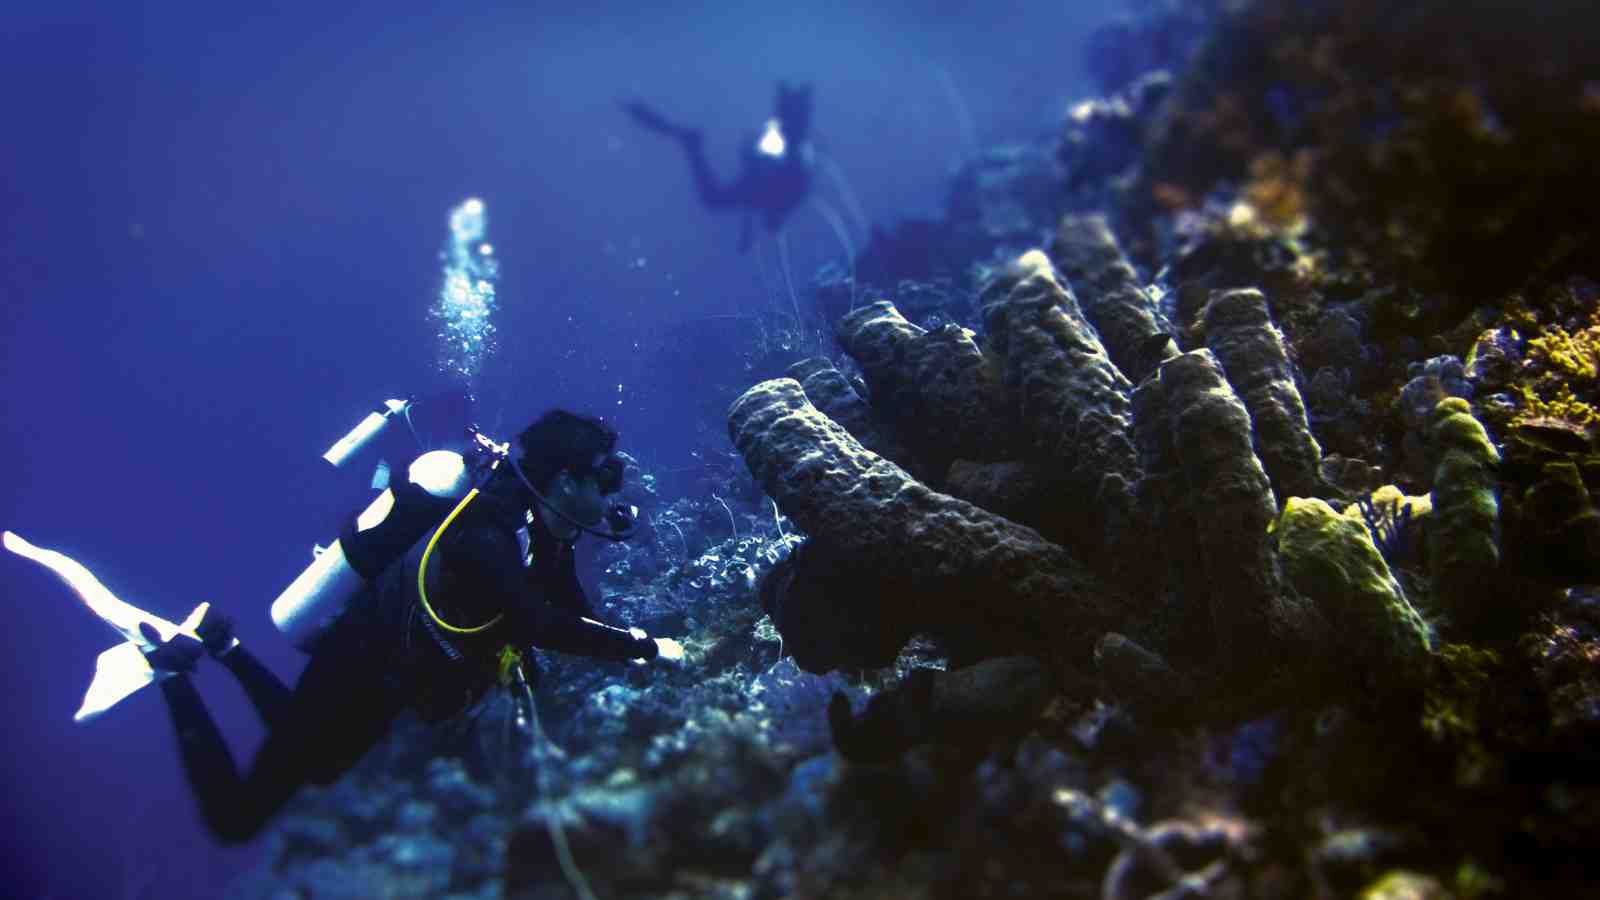 Joe Marlow observes a large organ sponge on a coral reef during a dive survey at Wakatobi Marine National Park.